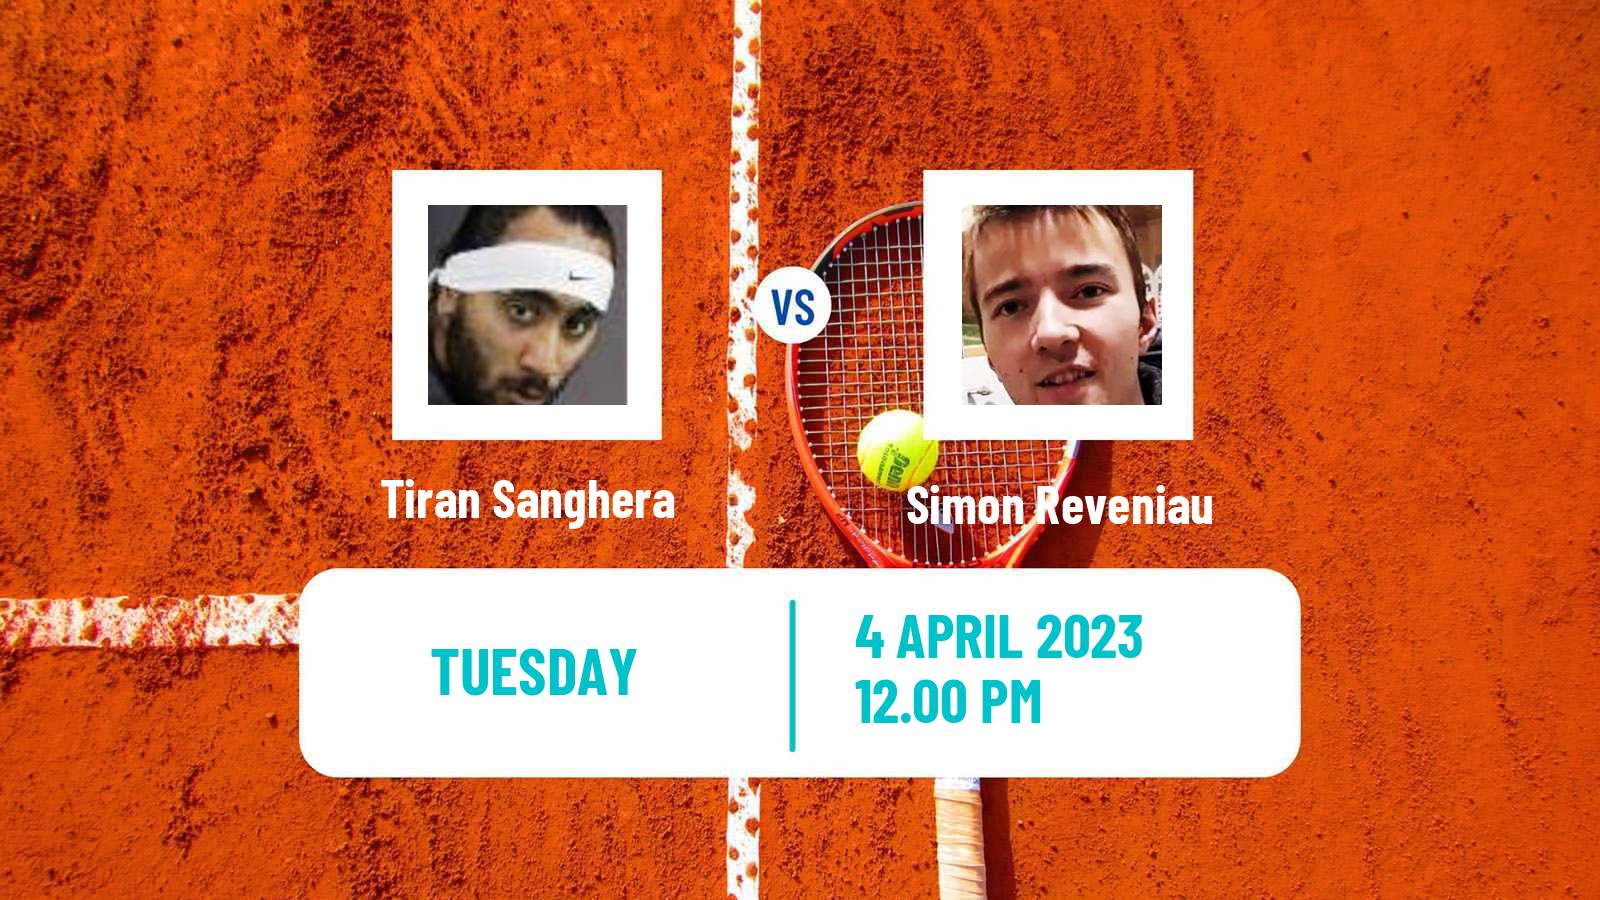 Tennis ITF Tournaments Tiran Sanghera - Simon Reveniau